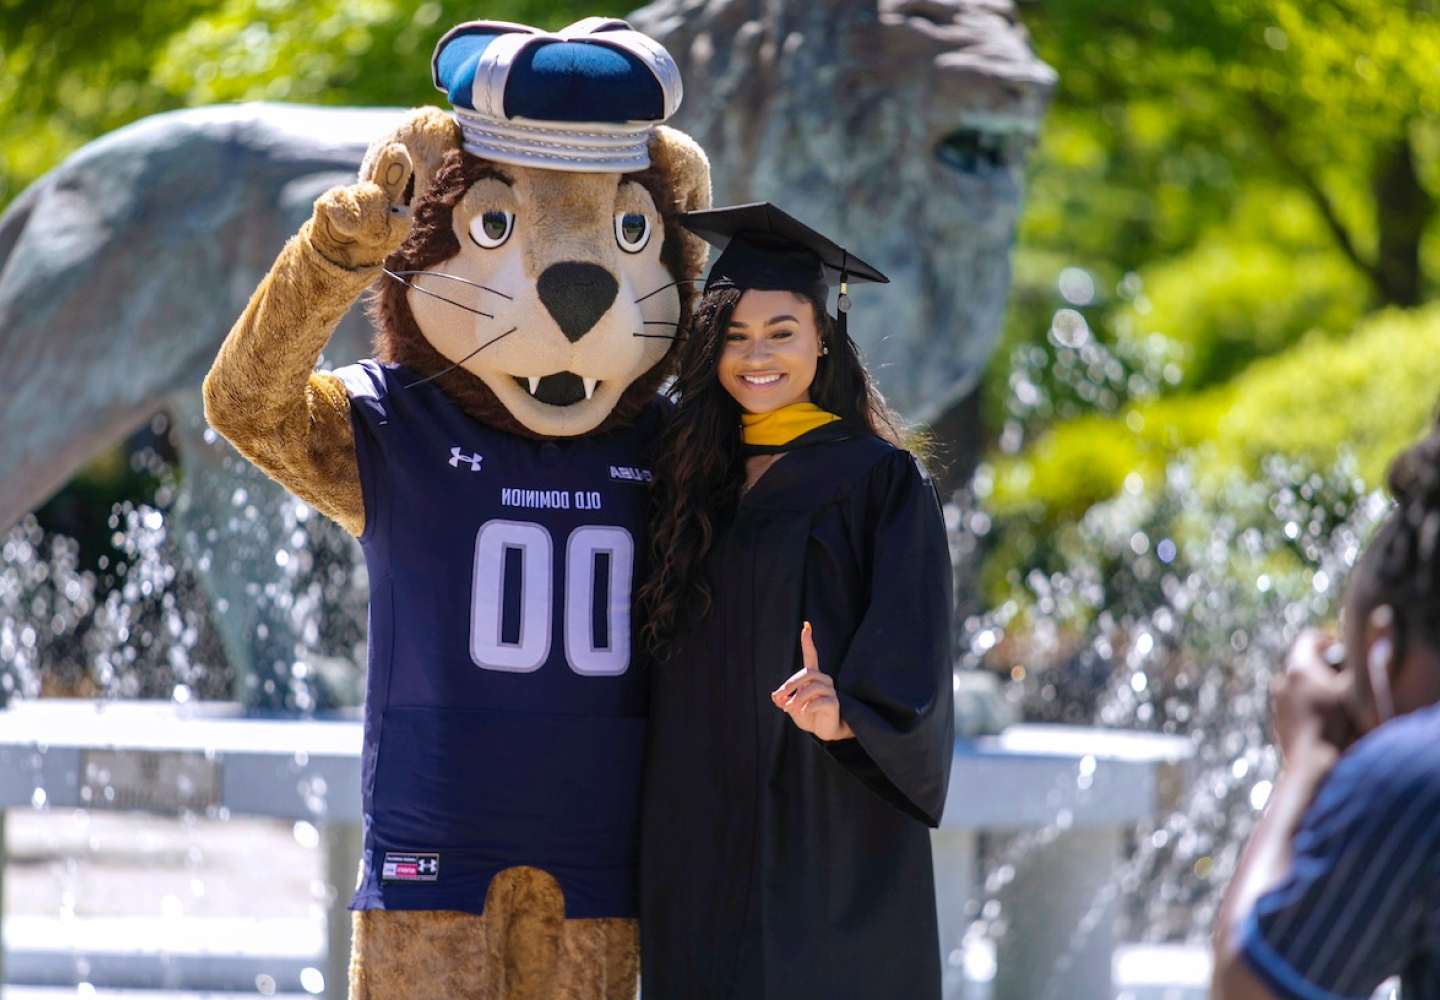 ODU Grad with Big Blue Mascot